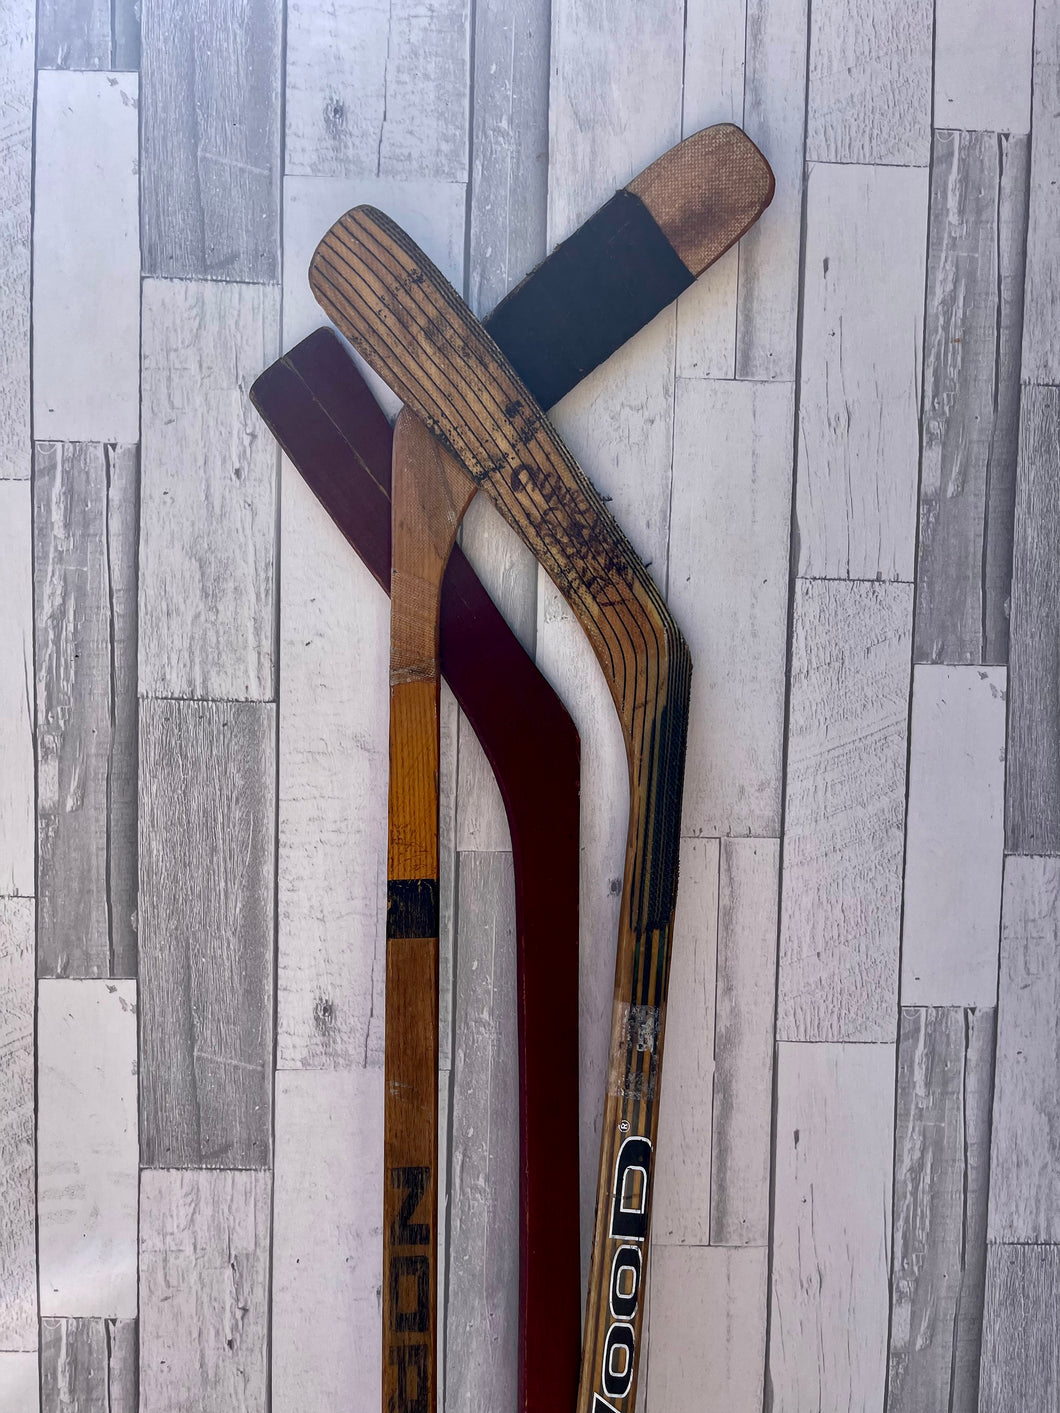 Vintage Canadian Ice Hockey Stick - Deep Brown SHERWOOD